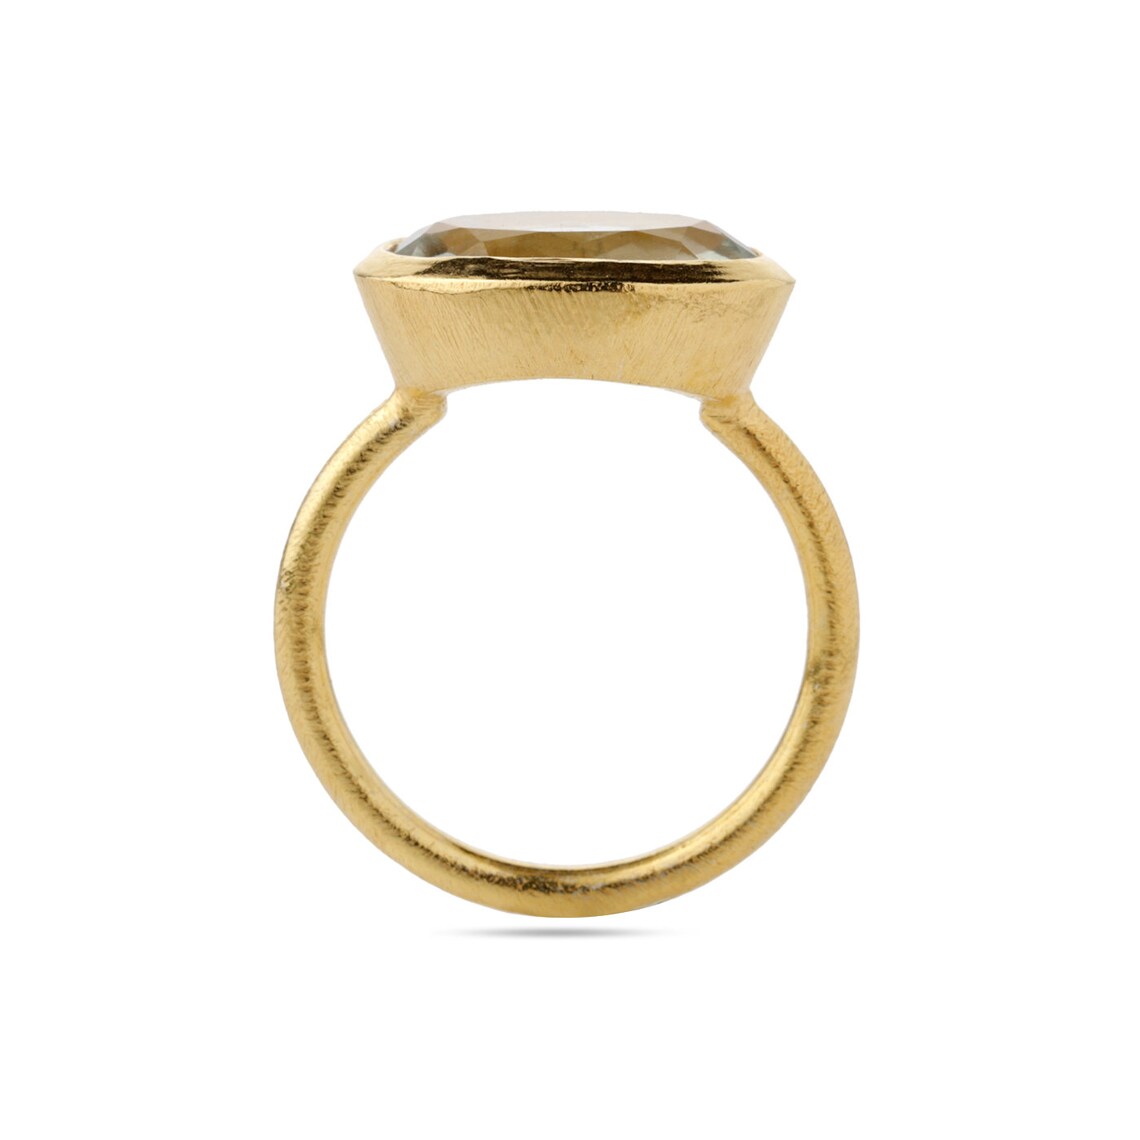 Green Amethyst Ring, oval green amethyst Ring, 925 Sterling Silver Green amethyst Gemstone Ring Gold Plated Ring